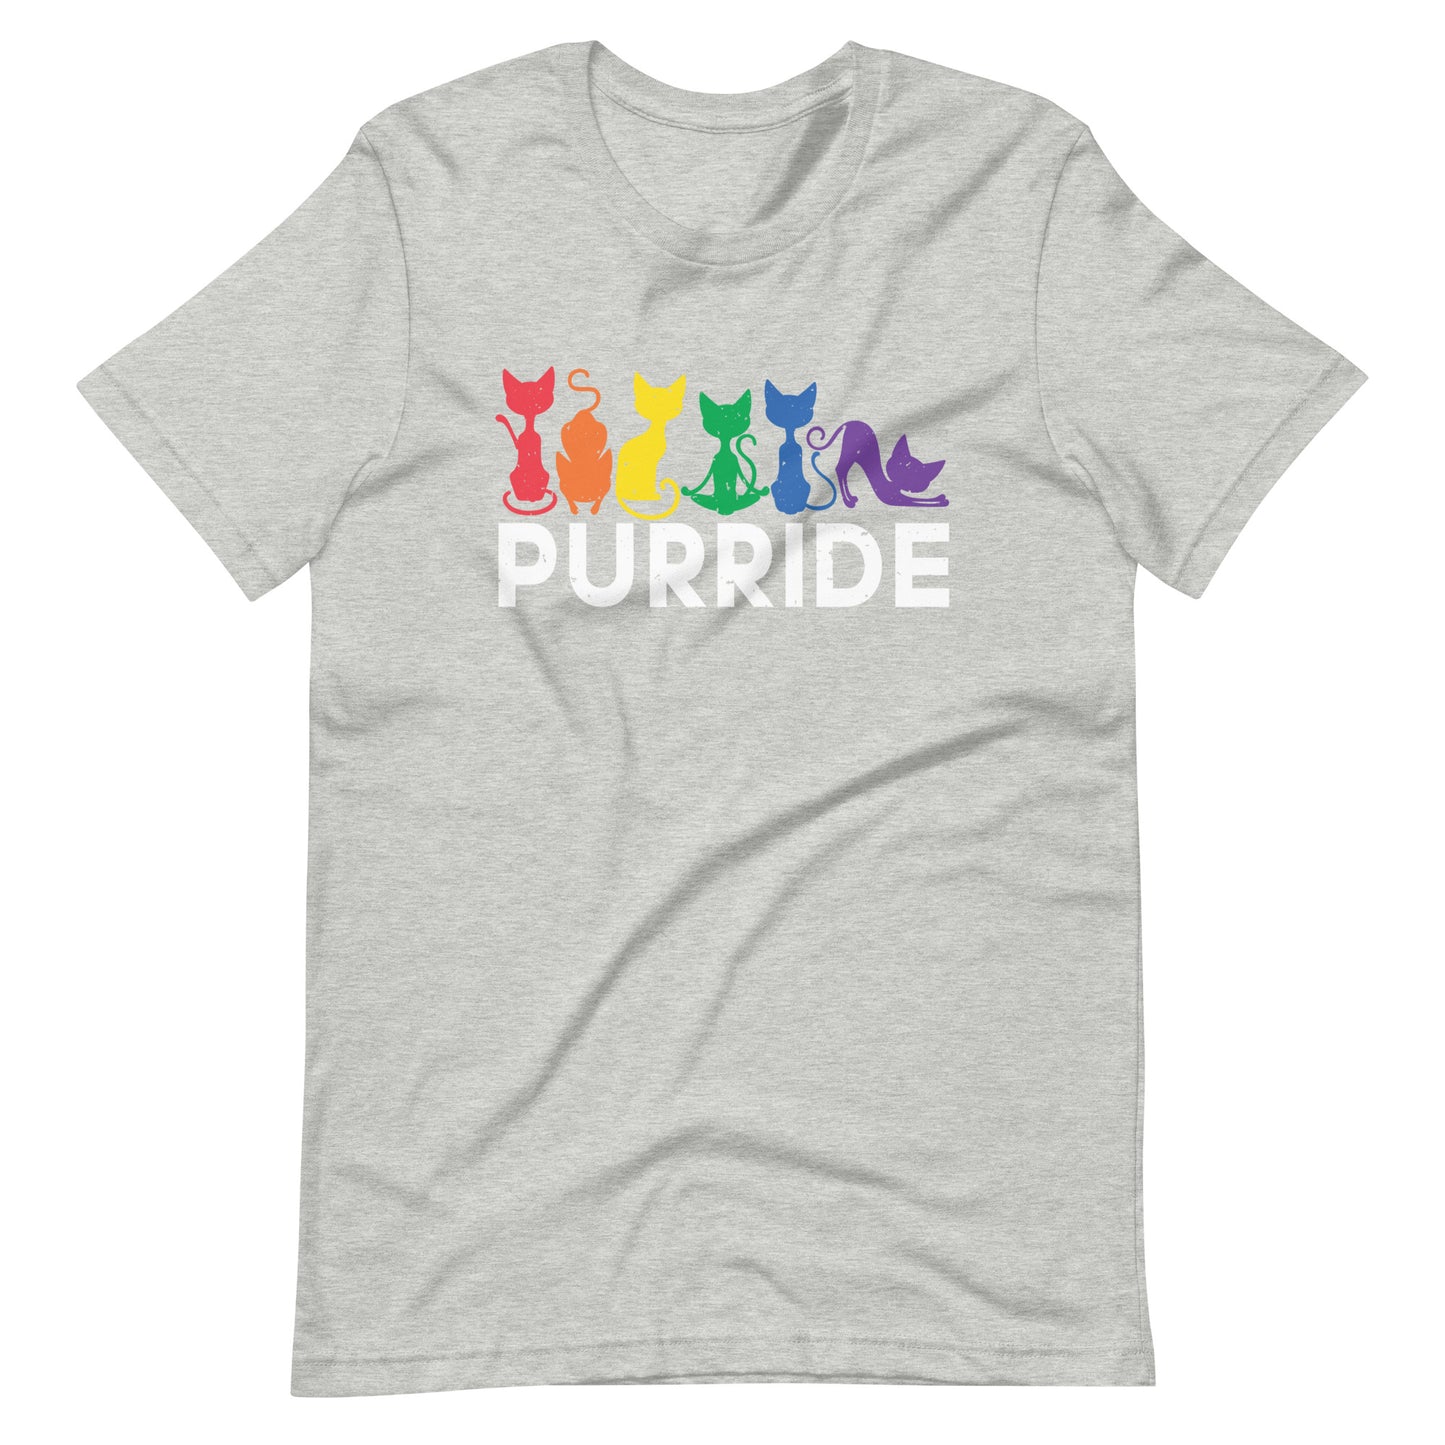 Purride Cat Unisex T-Shirt - Gay Pride Shirt - gay pride apparel